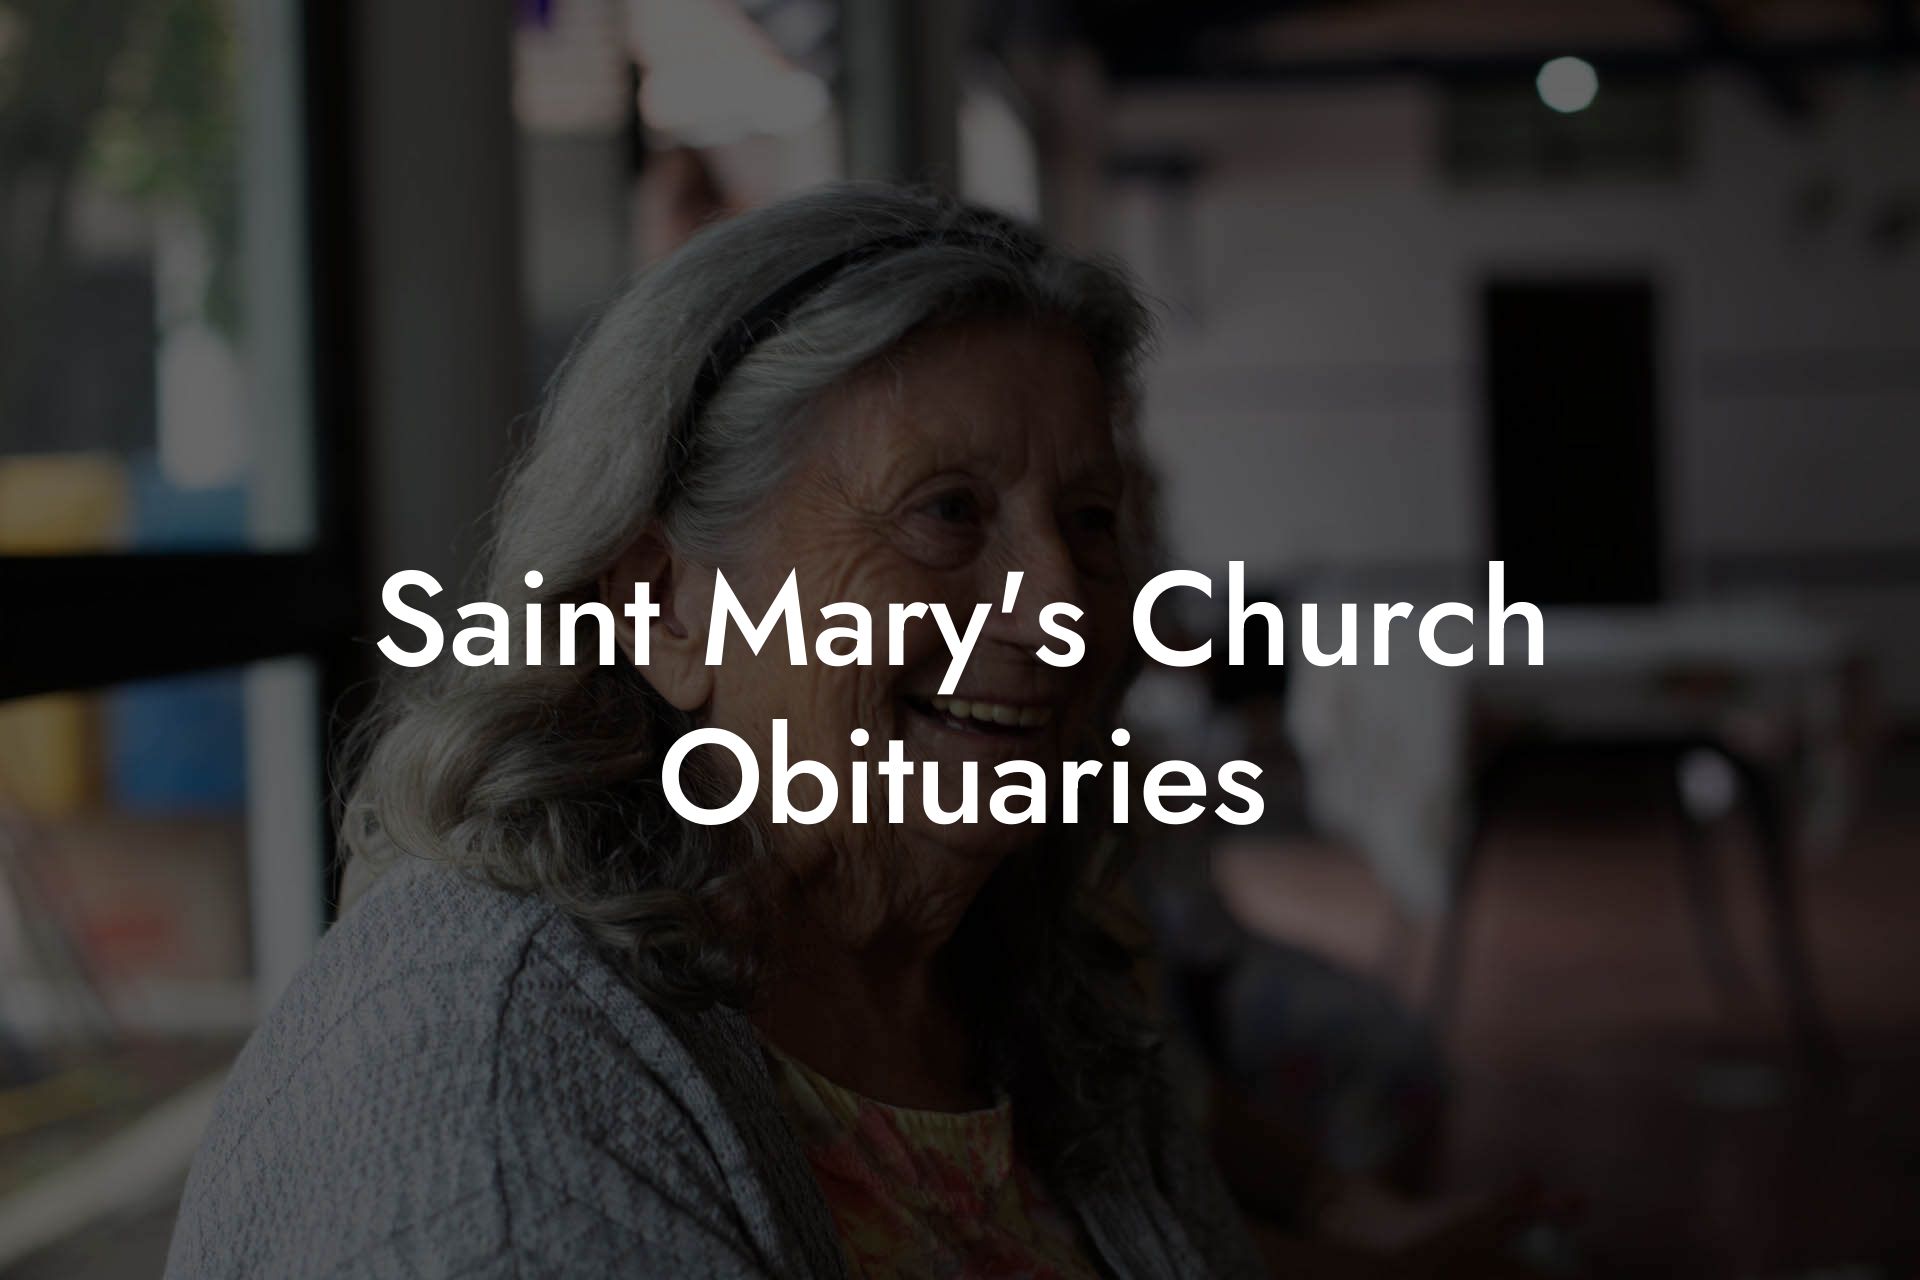 Saint Mary's Church Obituaries